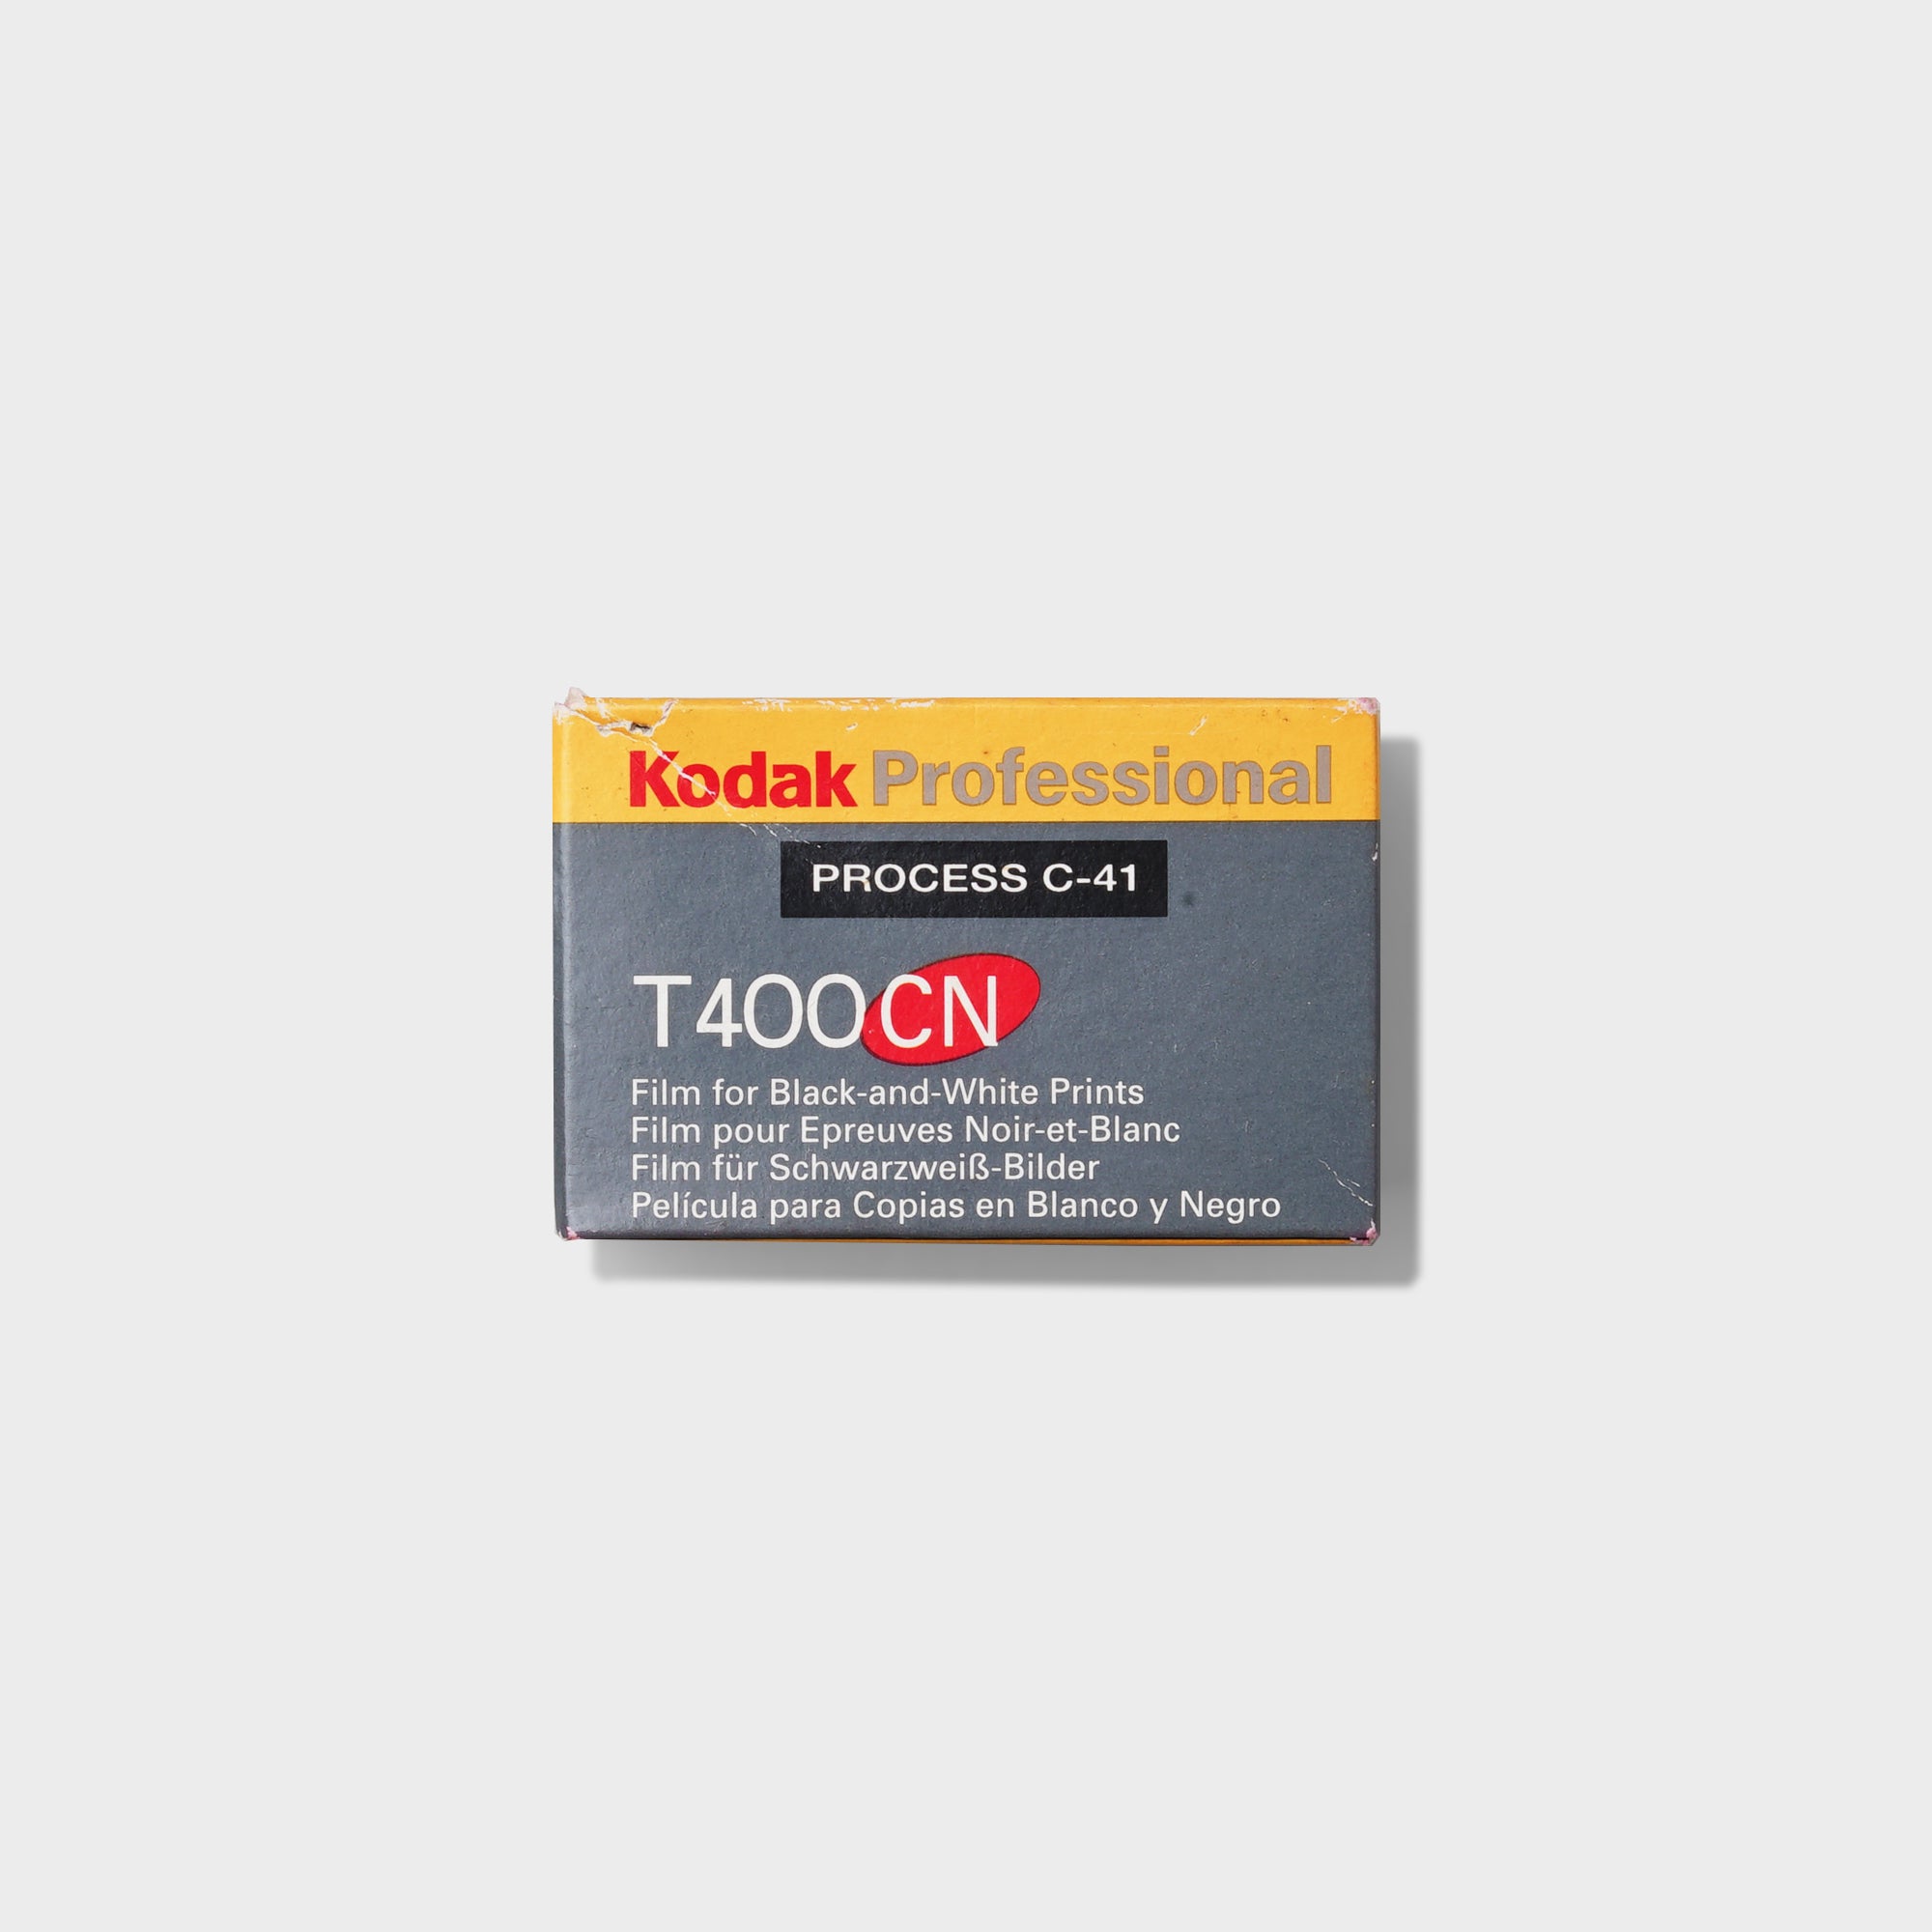 Buy Kodak T400CN now at Analogue Amsterdam